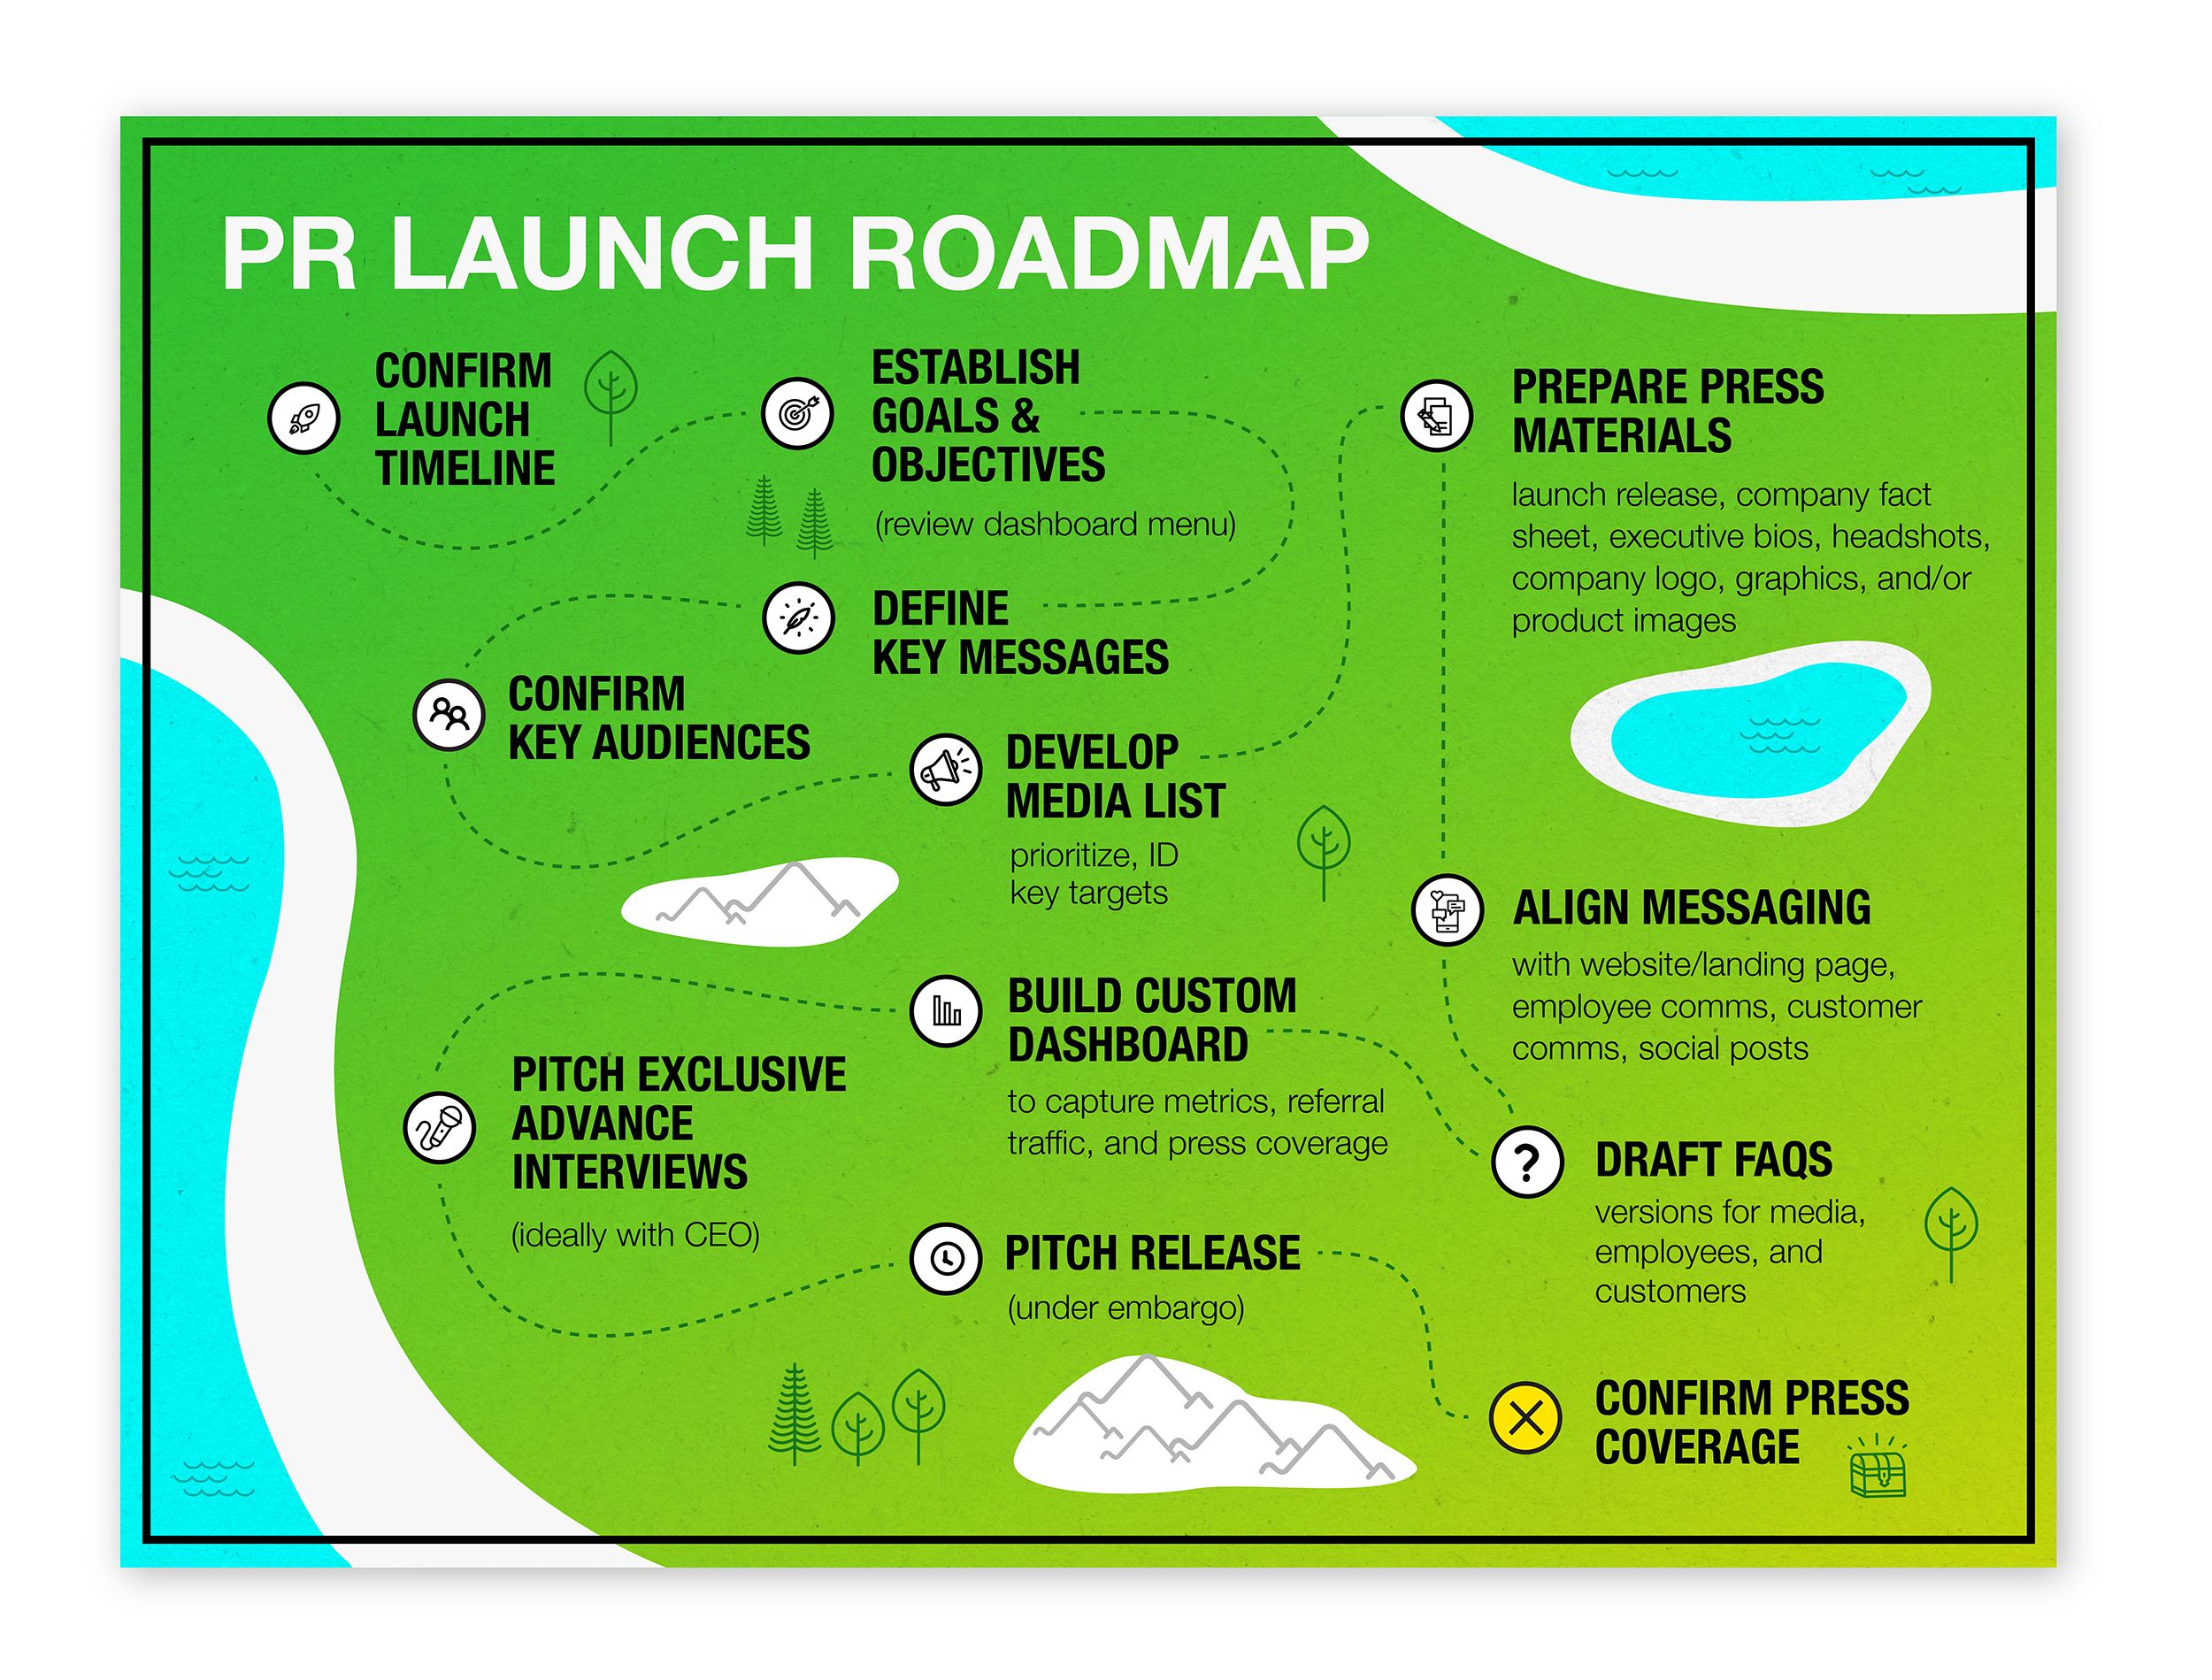 A PR Launch Roadmap infographic.